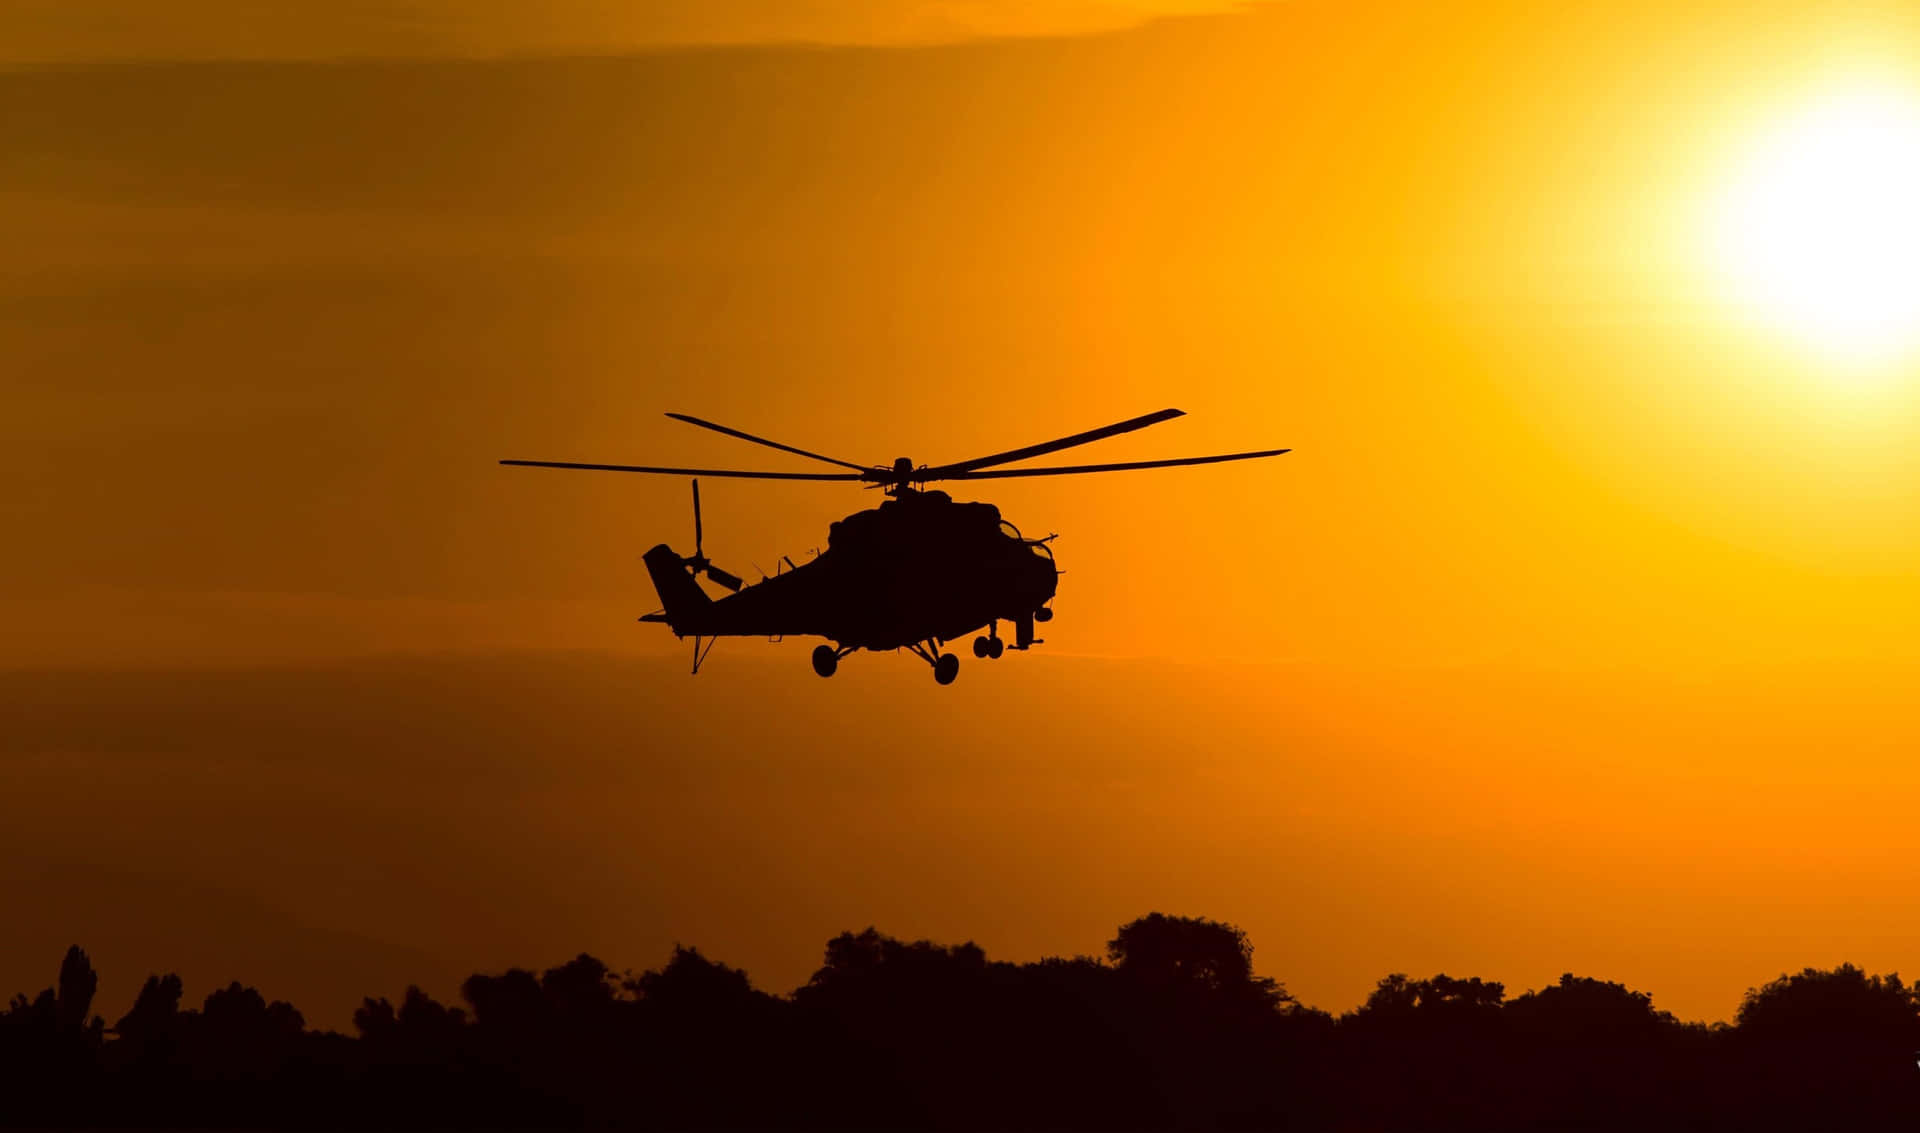 Enhelikopter Som Flyger På Himlen Vid Solnedgången.